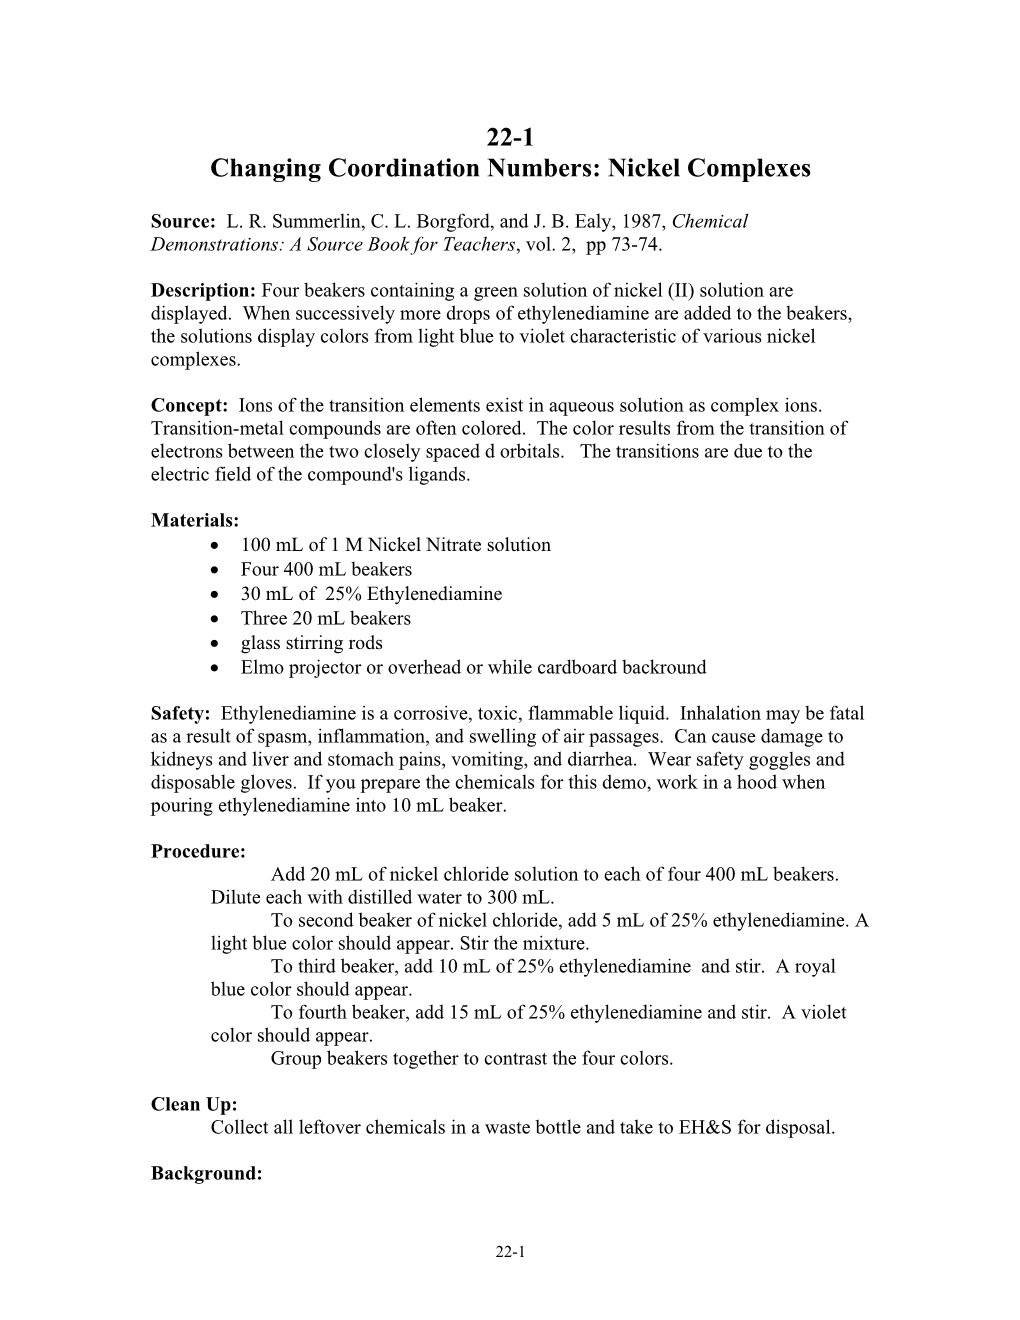 Changing Coordination Numbers: Nickel Complexes